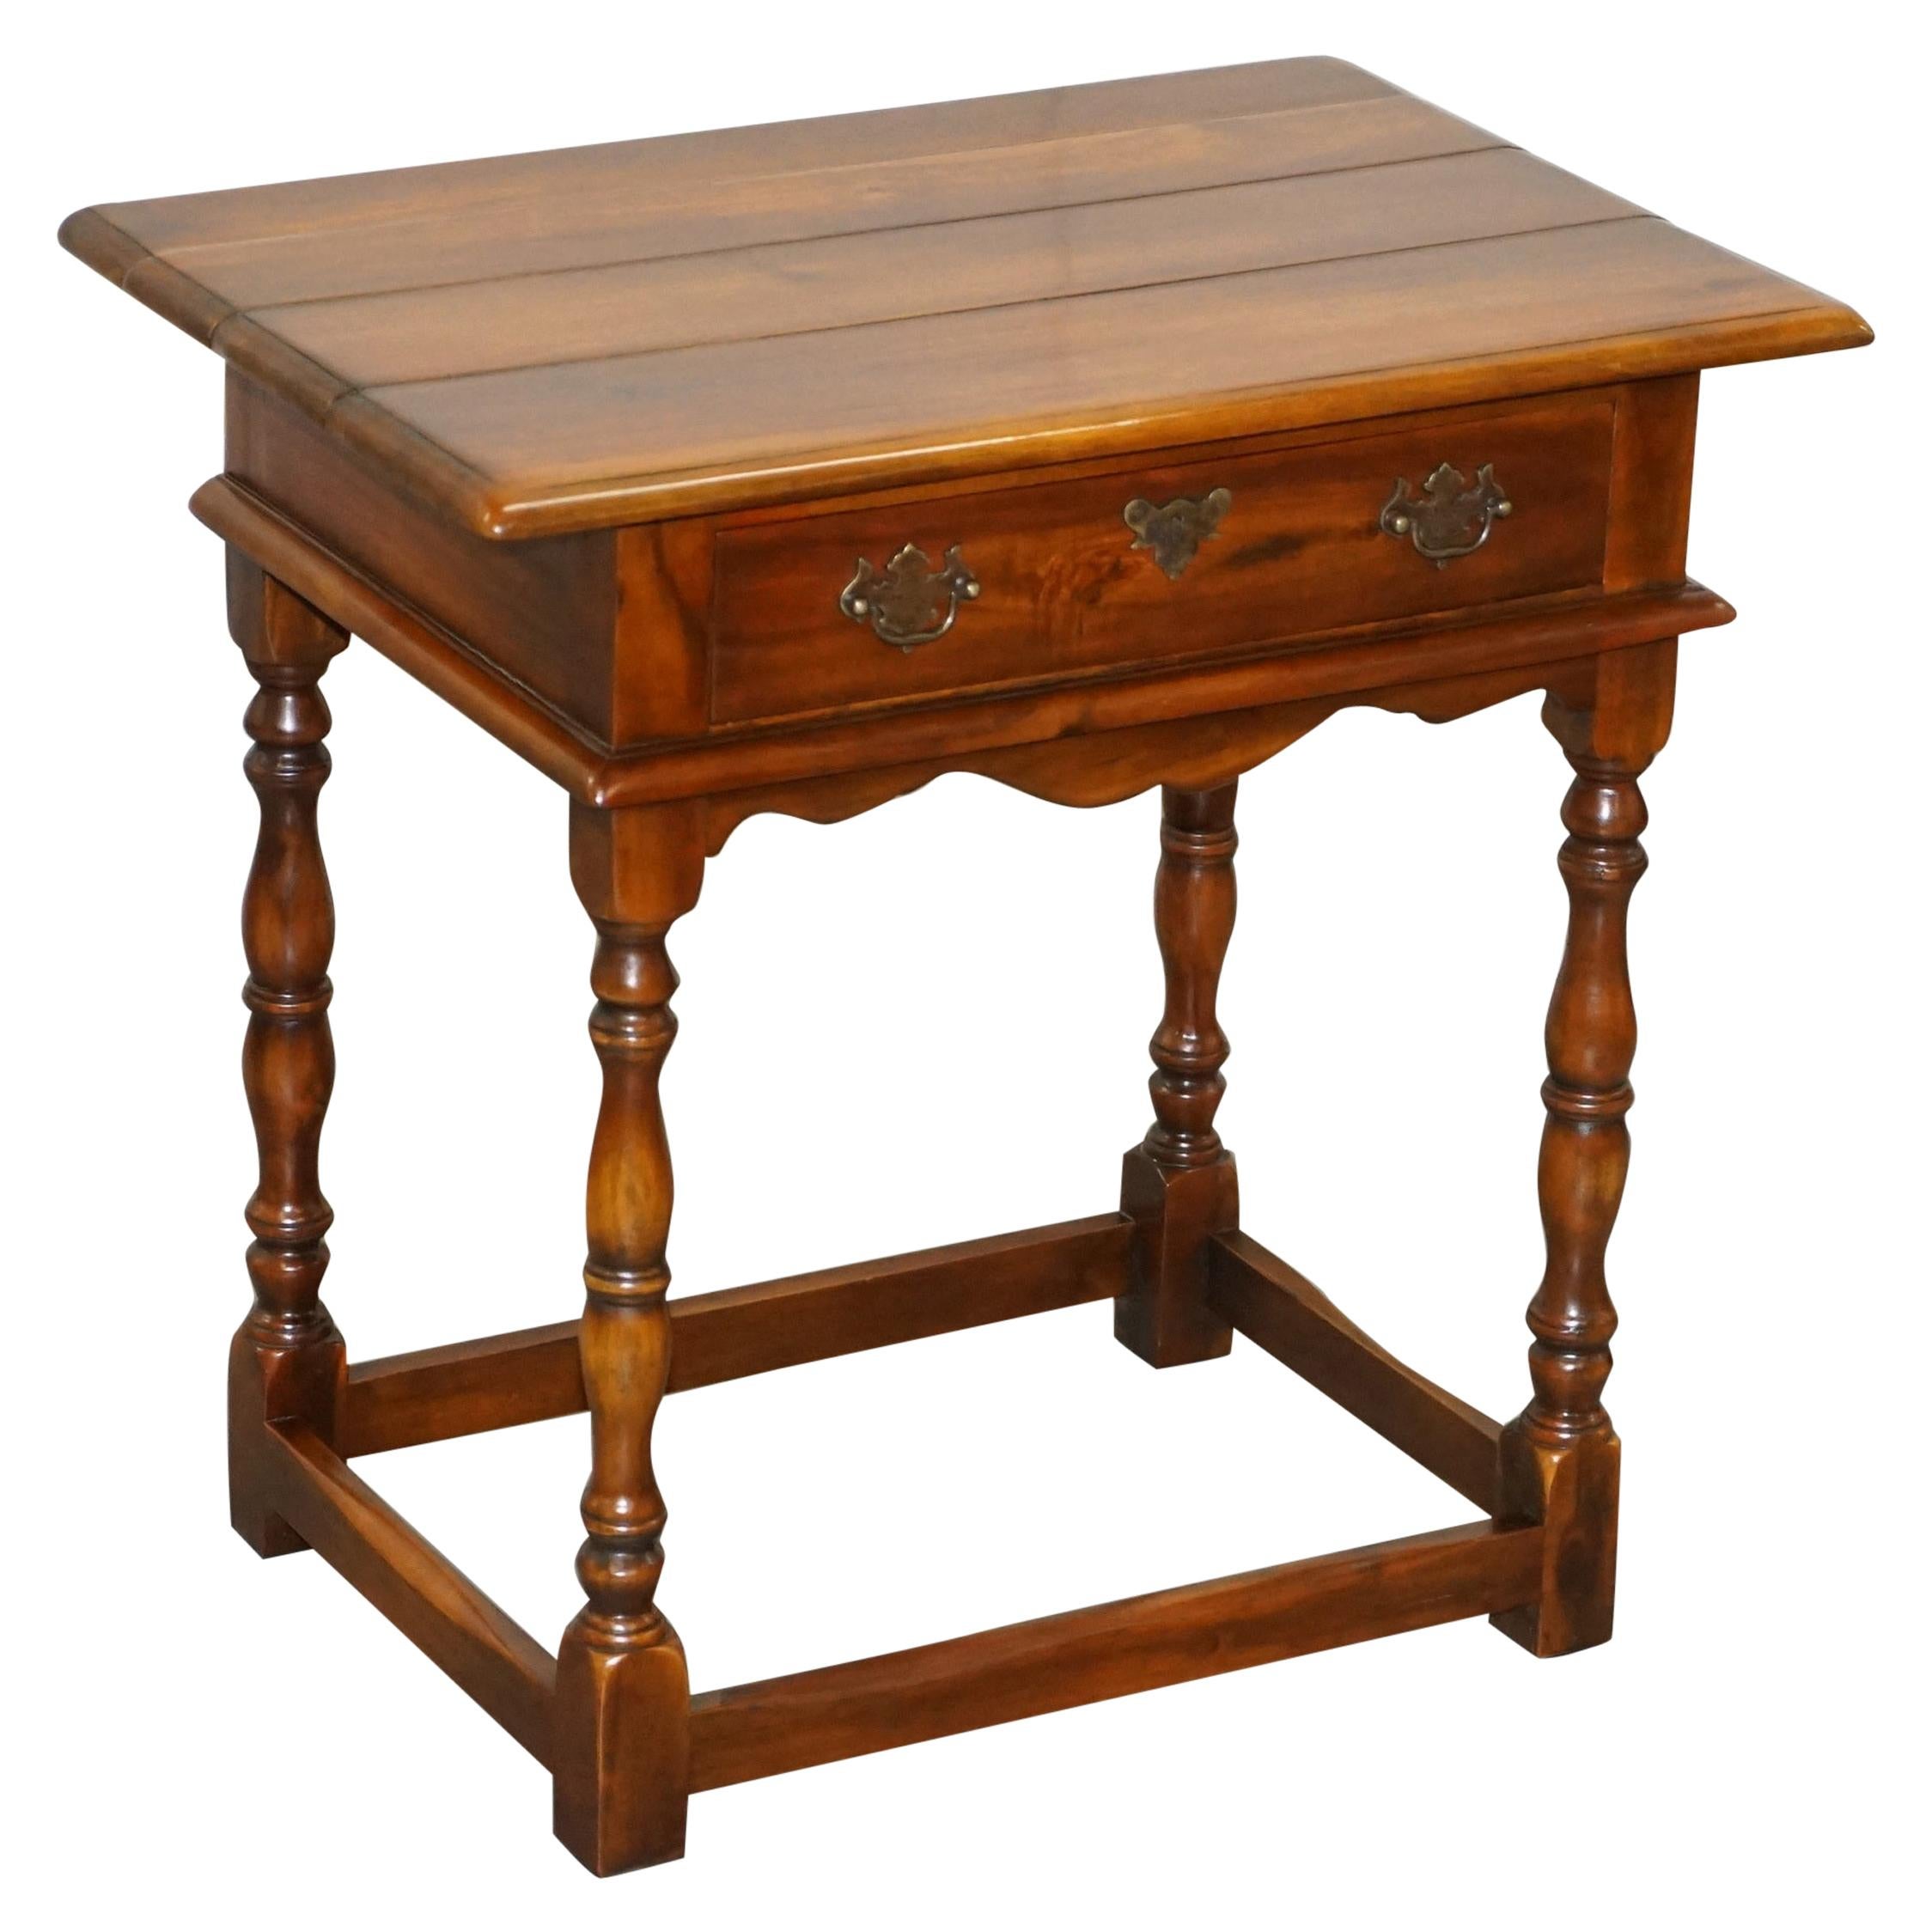 Luxury Large Theodore Alexander Hardwood Side Table with Single Drawer Campaigner (Table d'appoint en bois dur Theodore Alexander avec un seul tiroir)